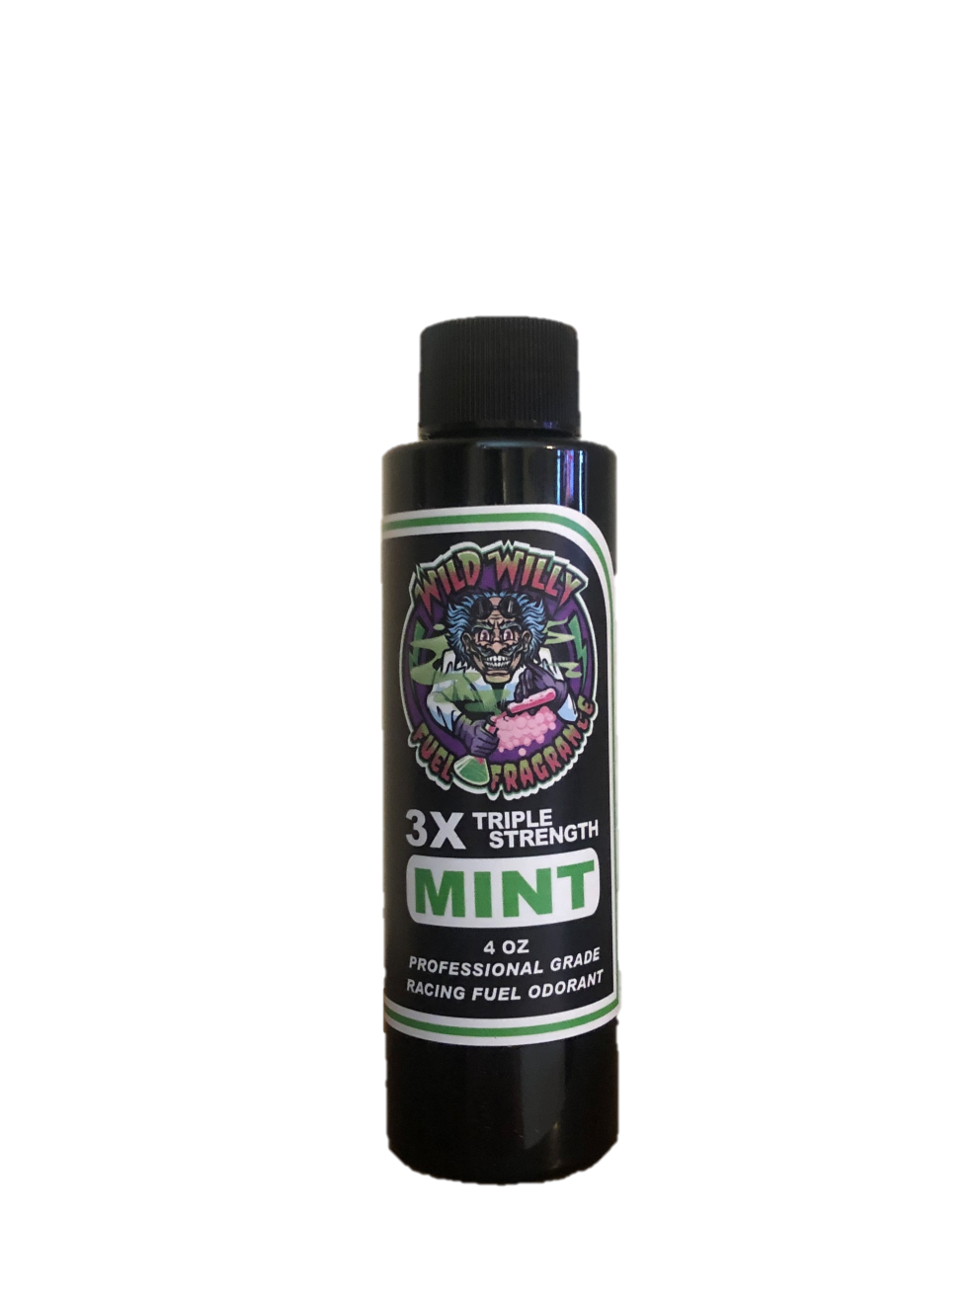 Mint - Wild Willy Fuel Fragrance - 3X Triple Strength!